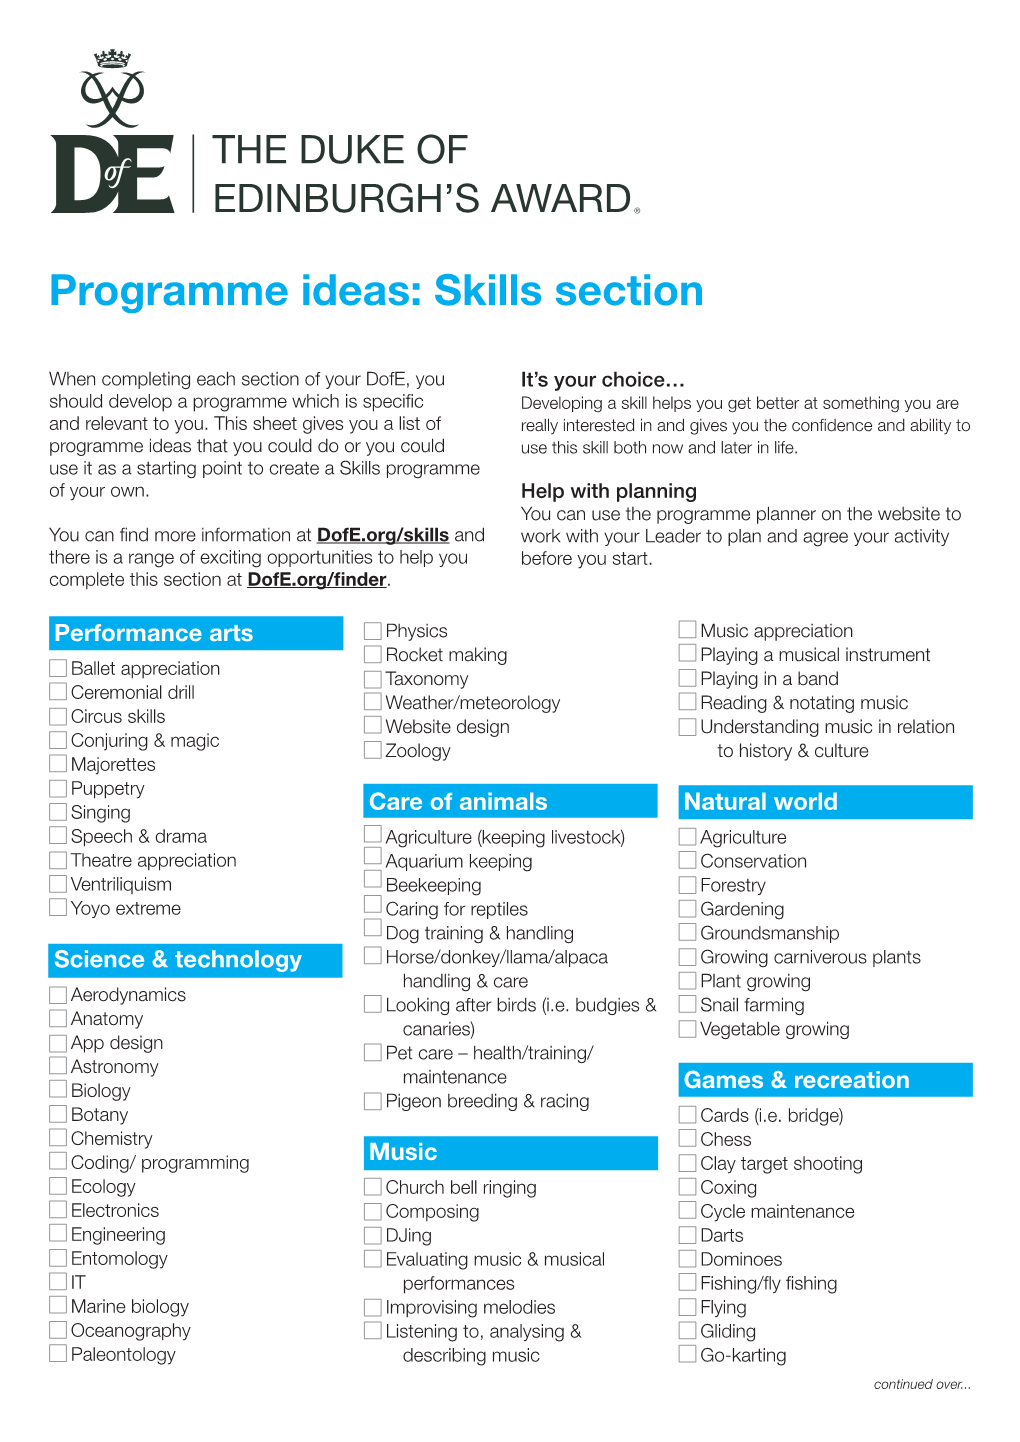 Programme Ideas: Skills Section